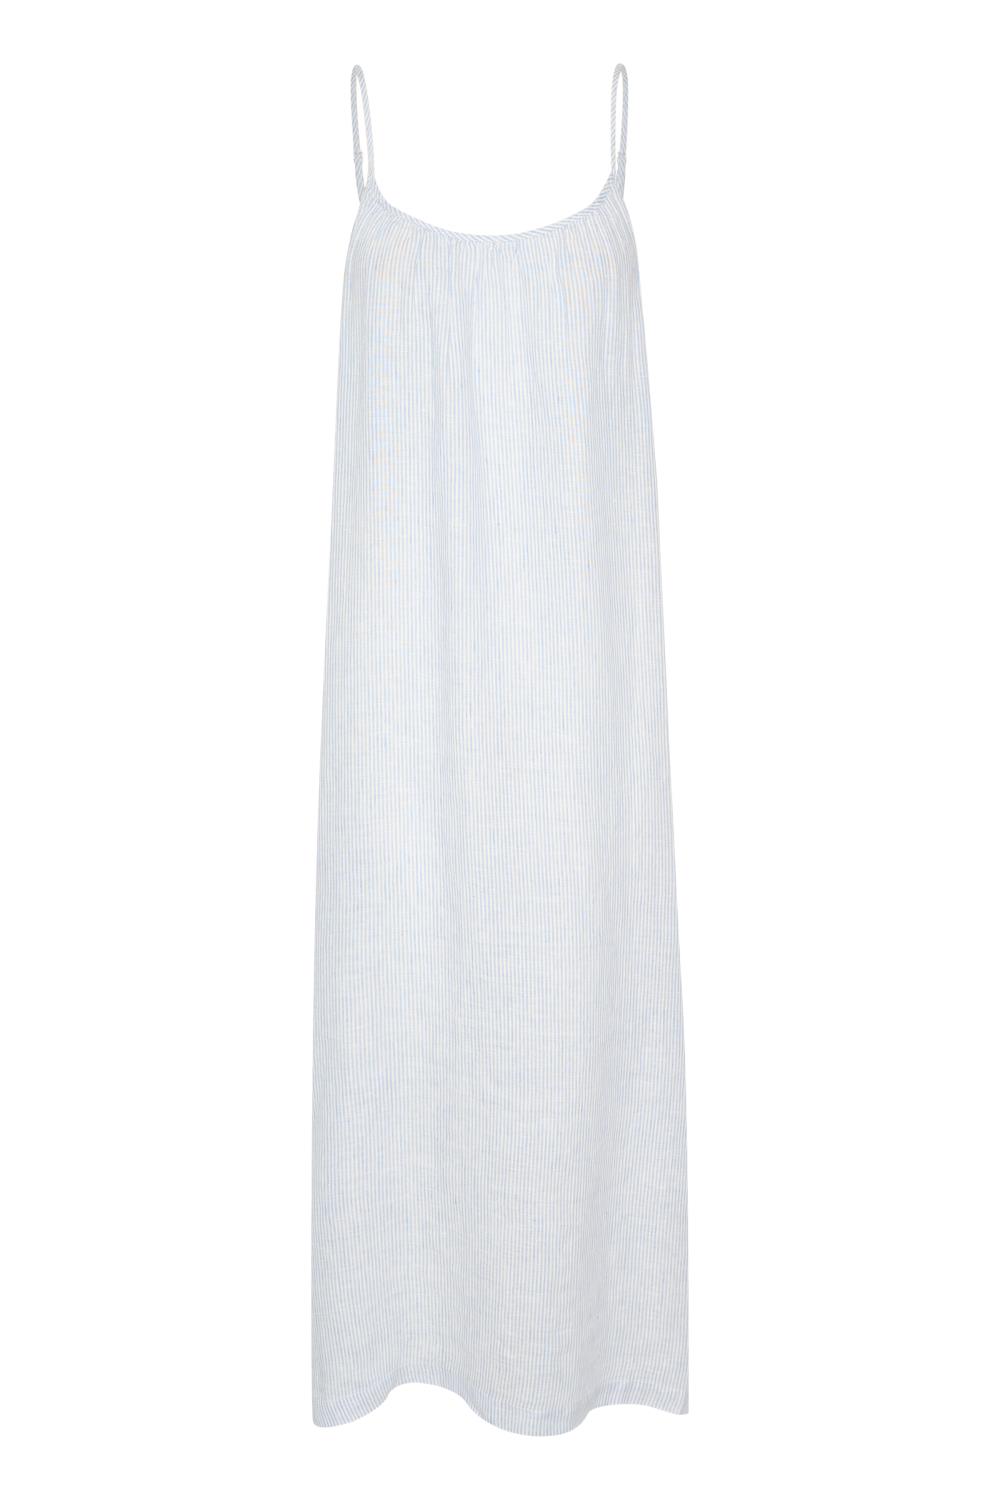 Part Two Alexiane Dress, kjole i lin, hvit/blå stripet